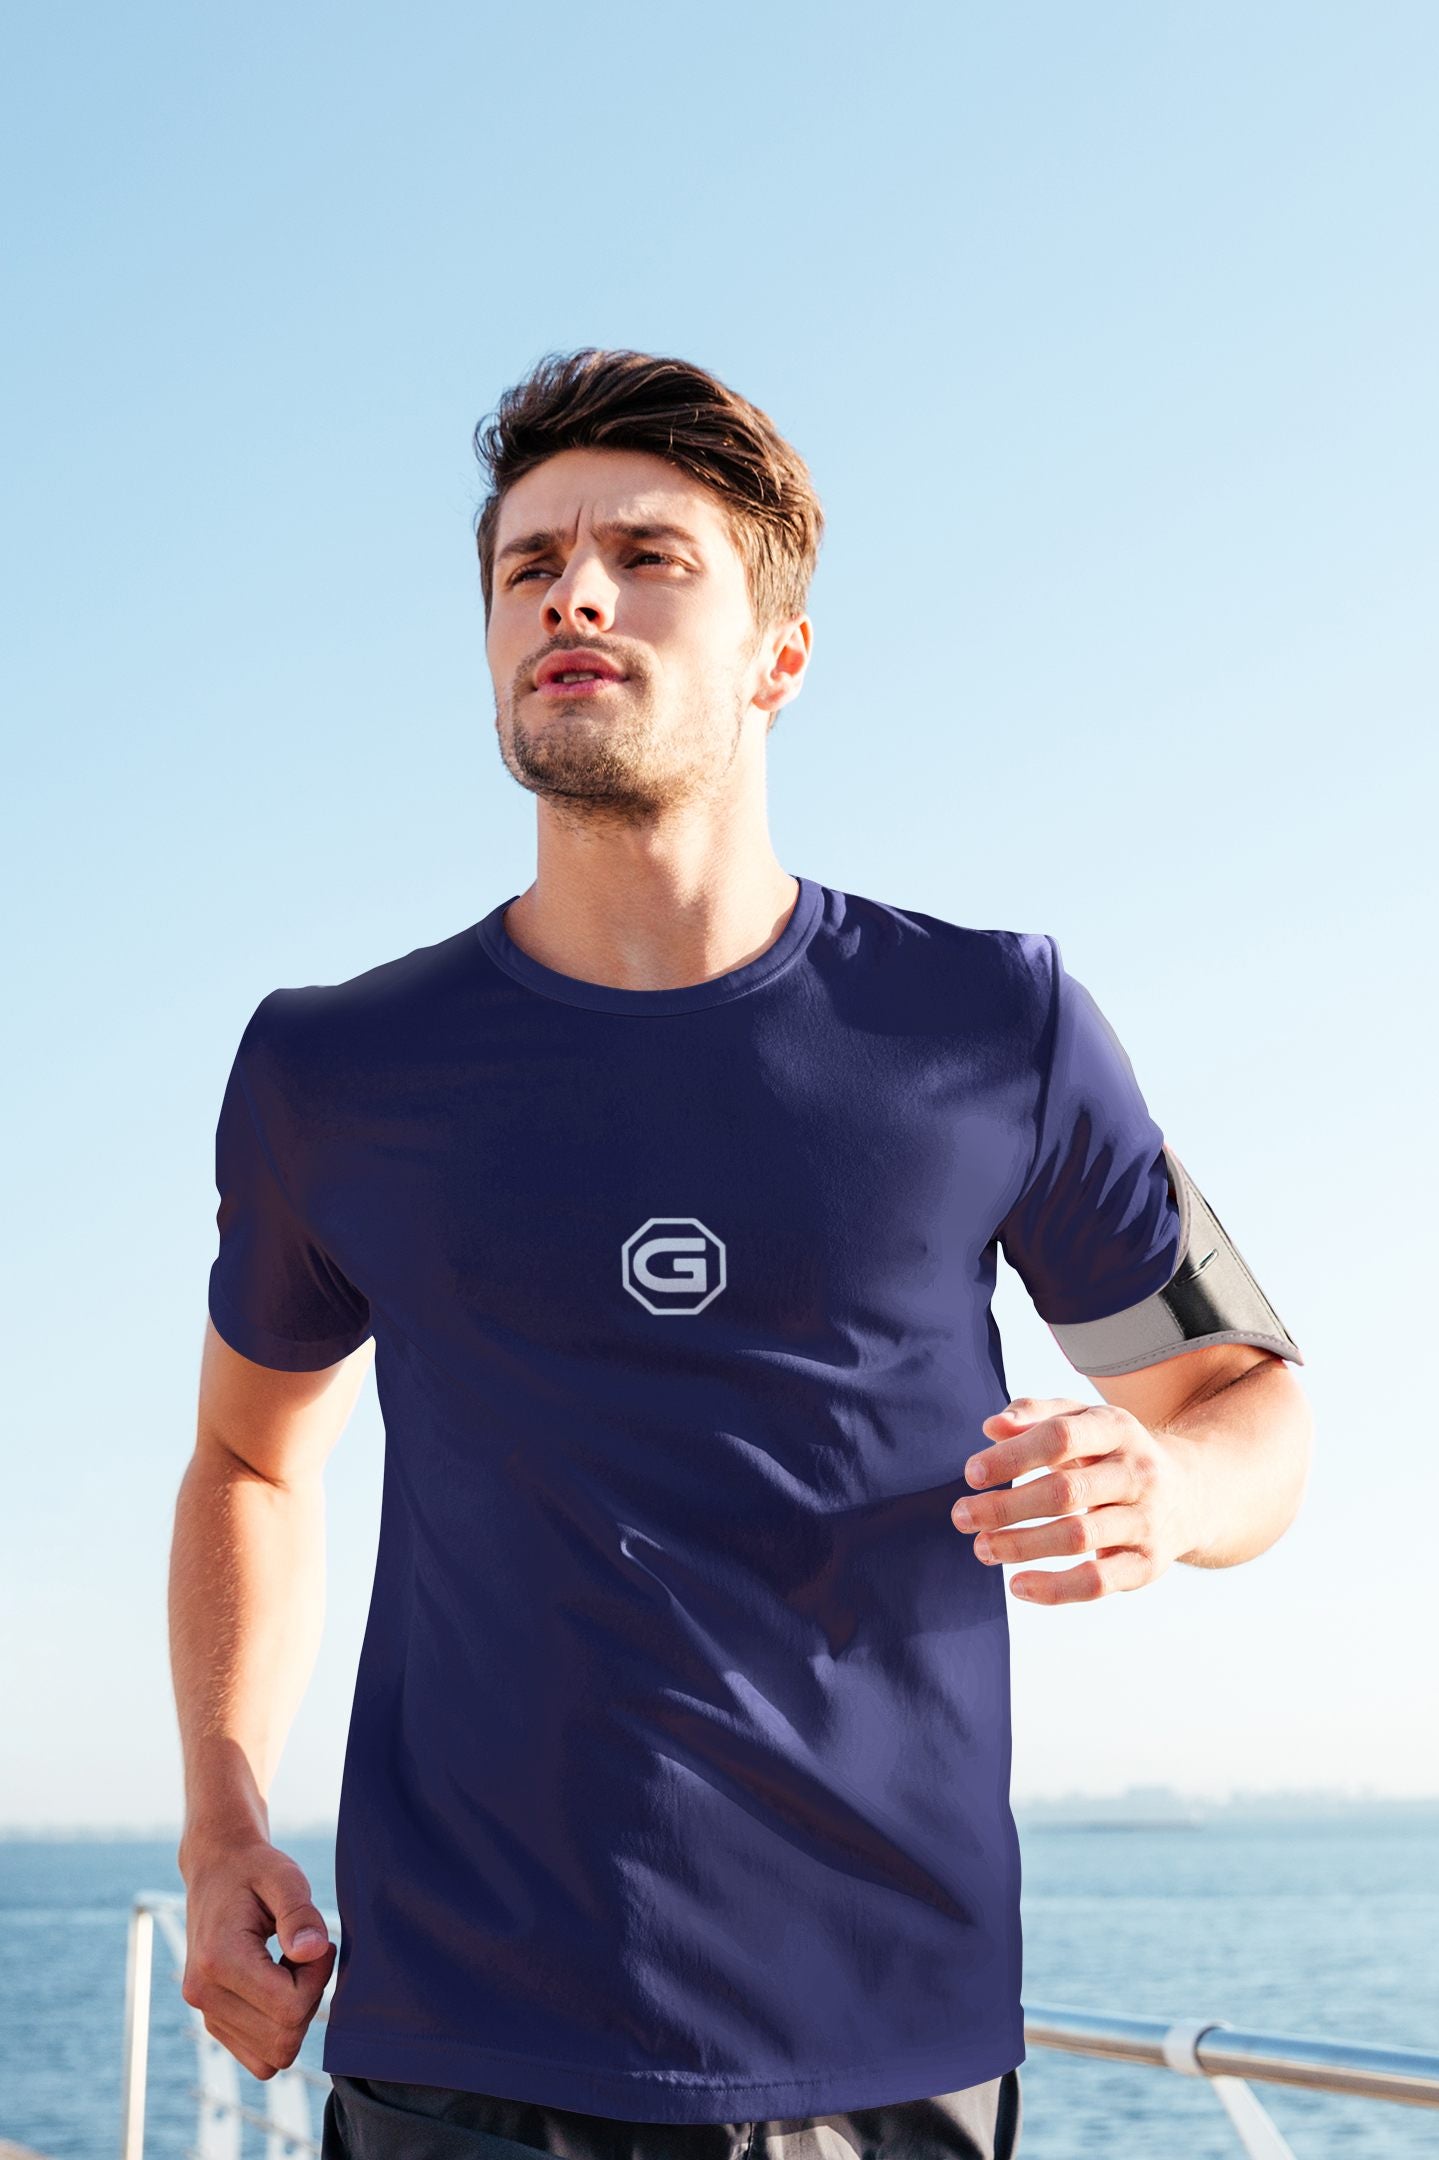 Stylish T shirts for men Active / Leisure Wear | Gymate Large G logo navy